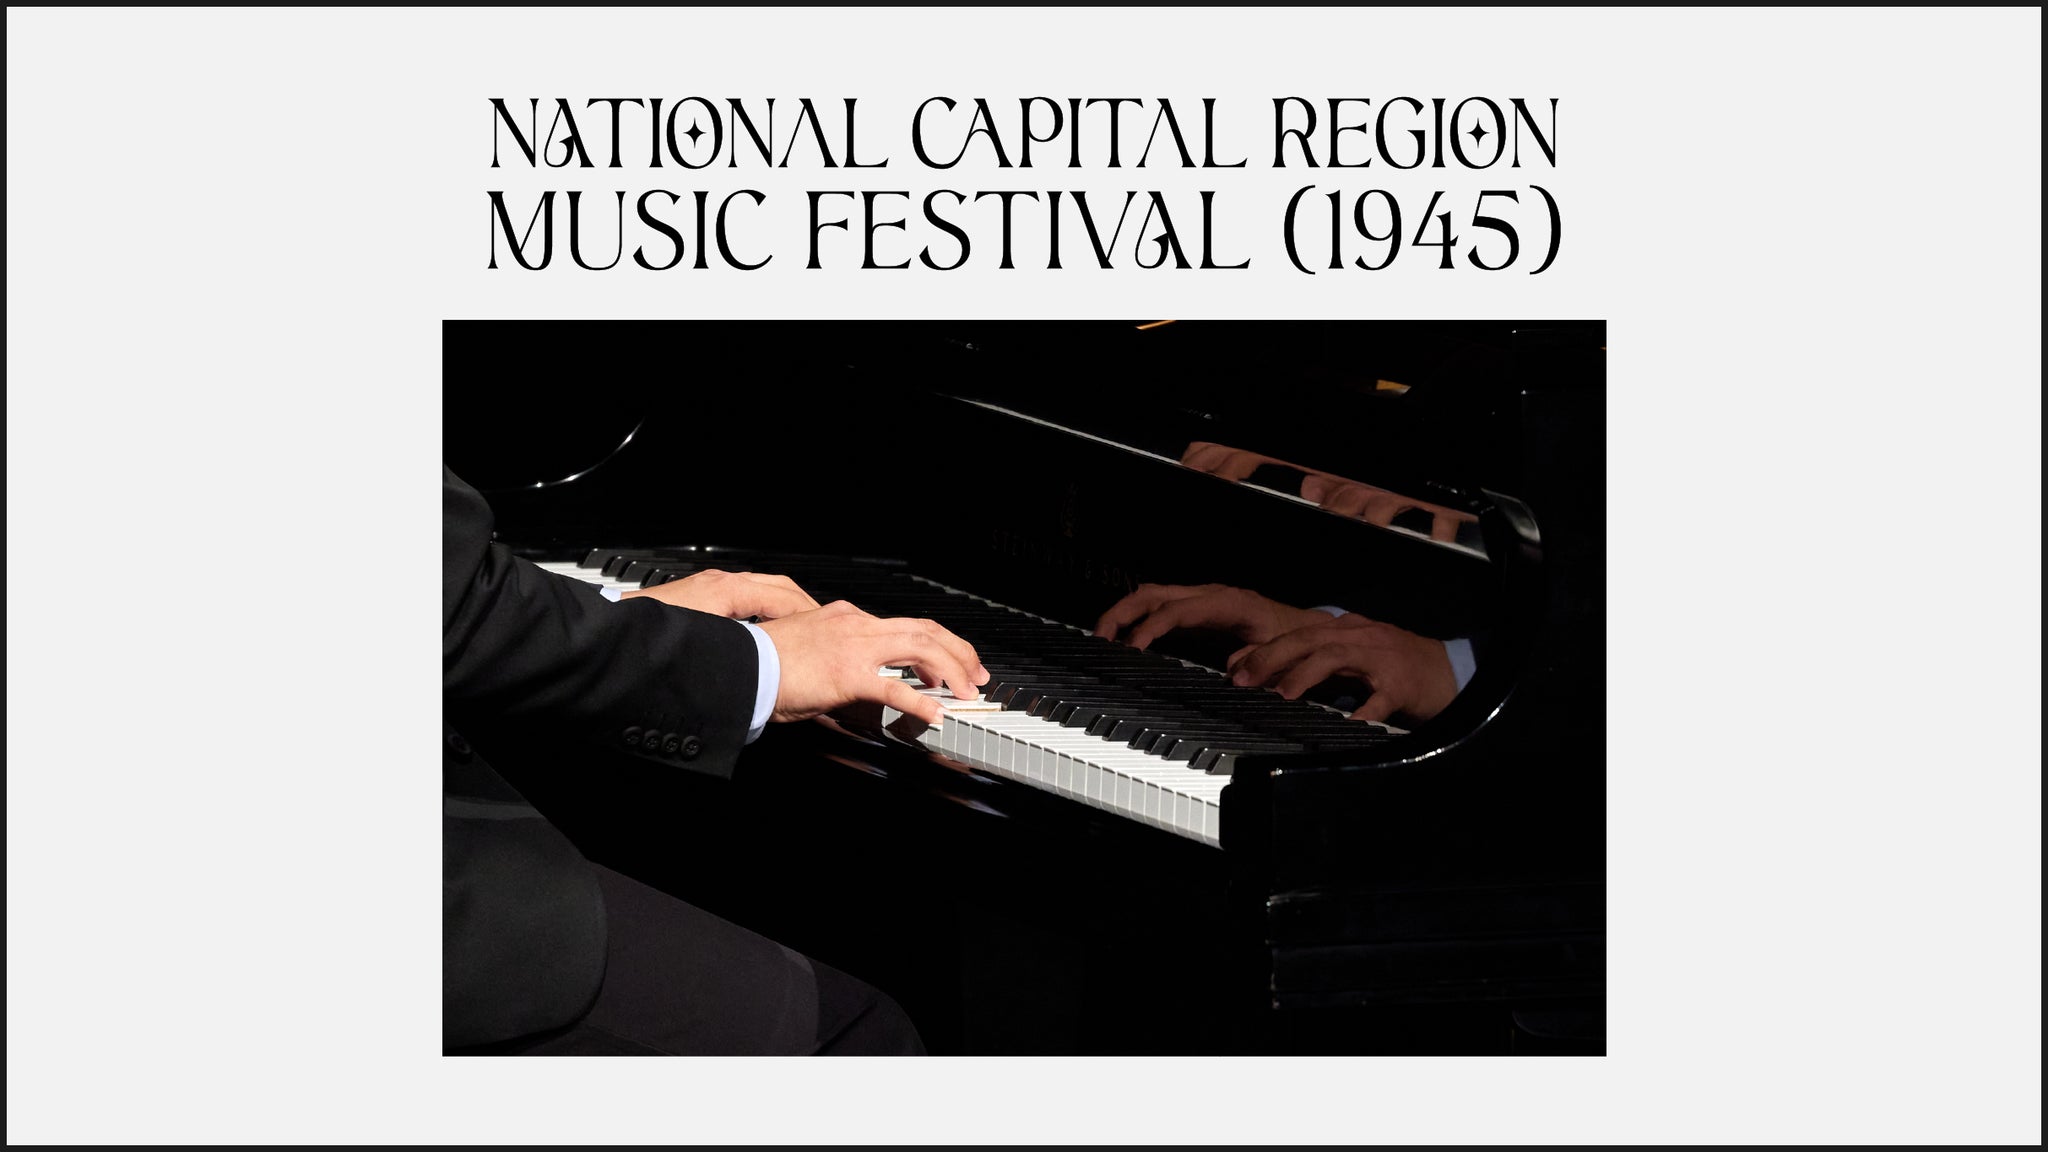 National Capital Region Music Festival (1945): Highlights Concert